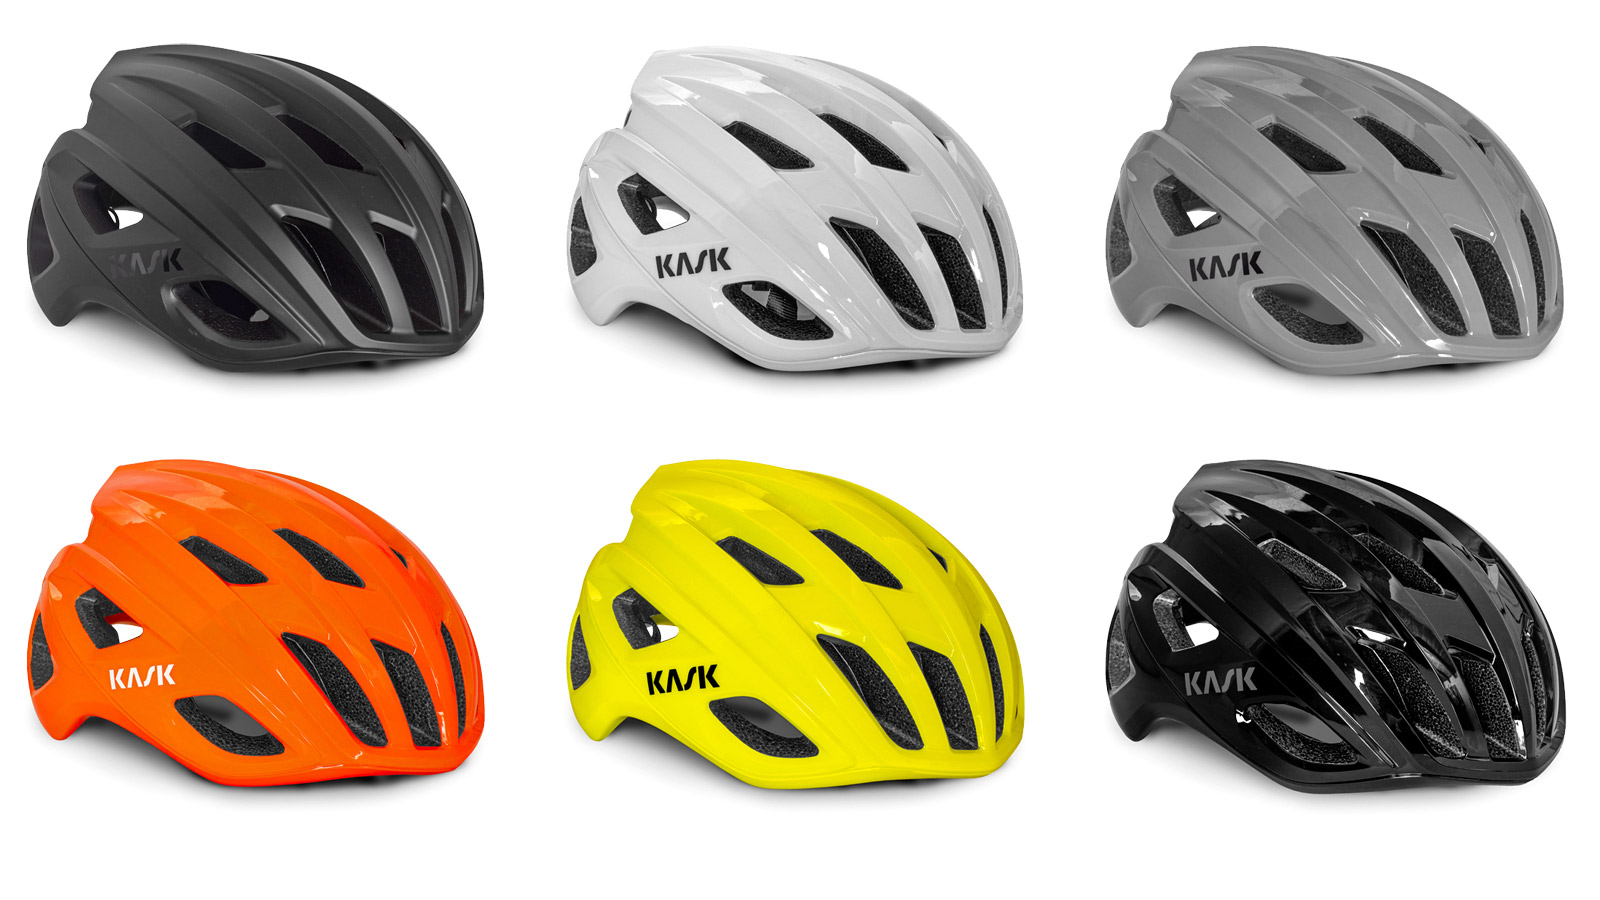 Kask Mojito3 road helmet, updated redesigned lightweight fully-vented semi-aero road bike helmet